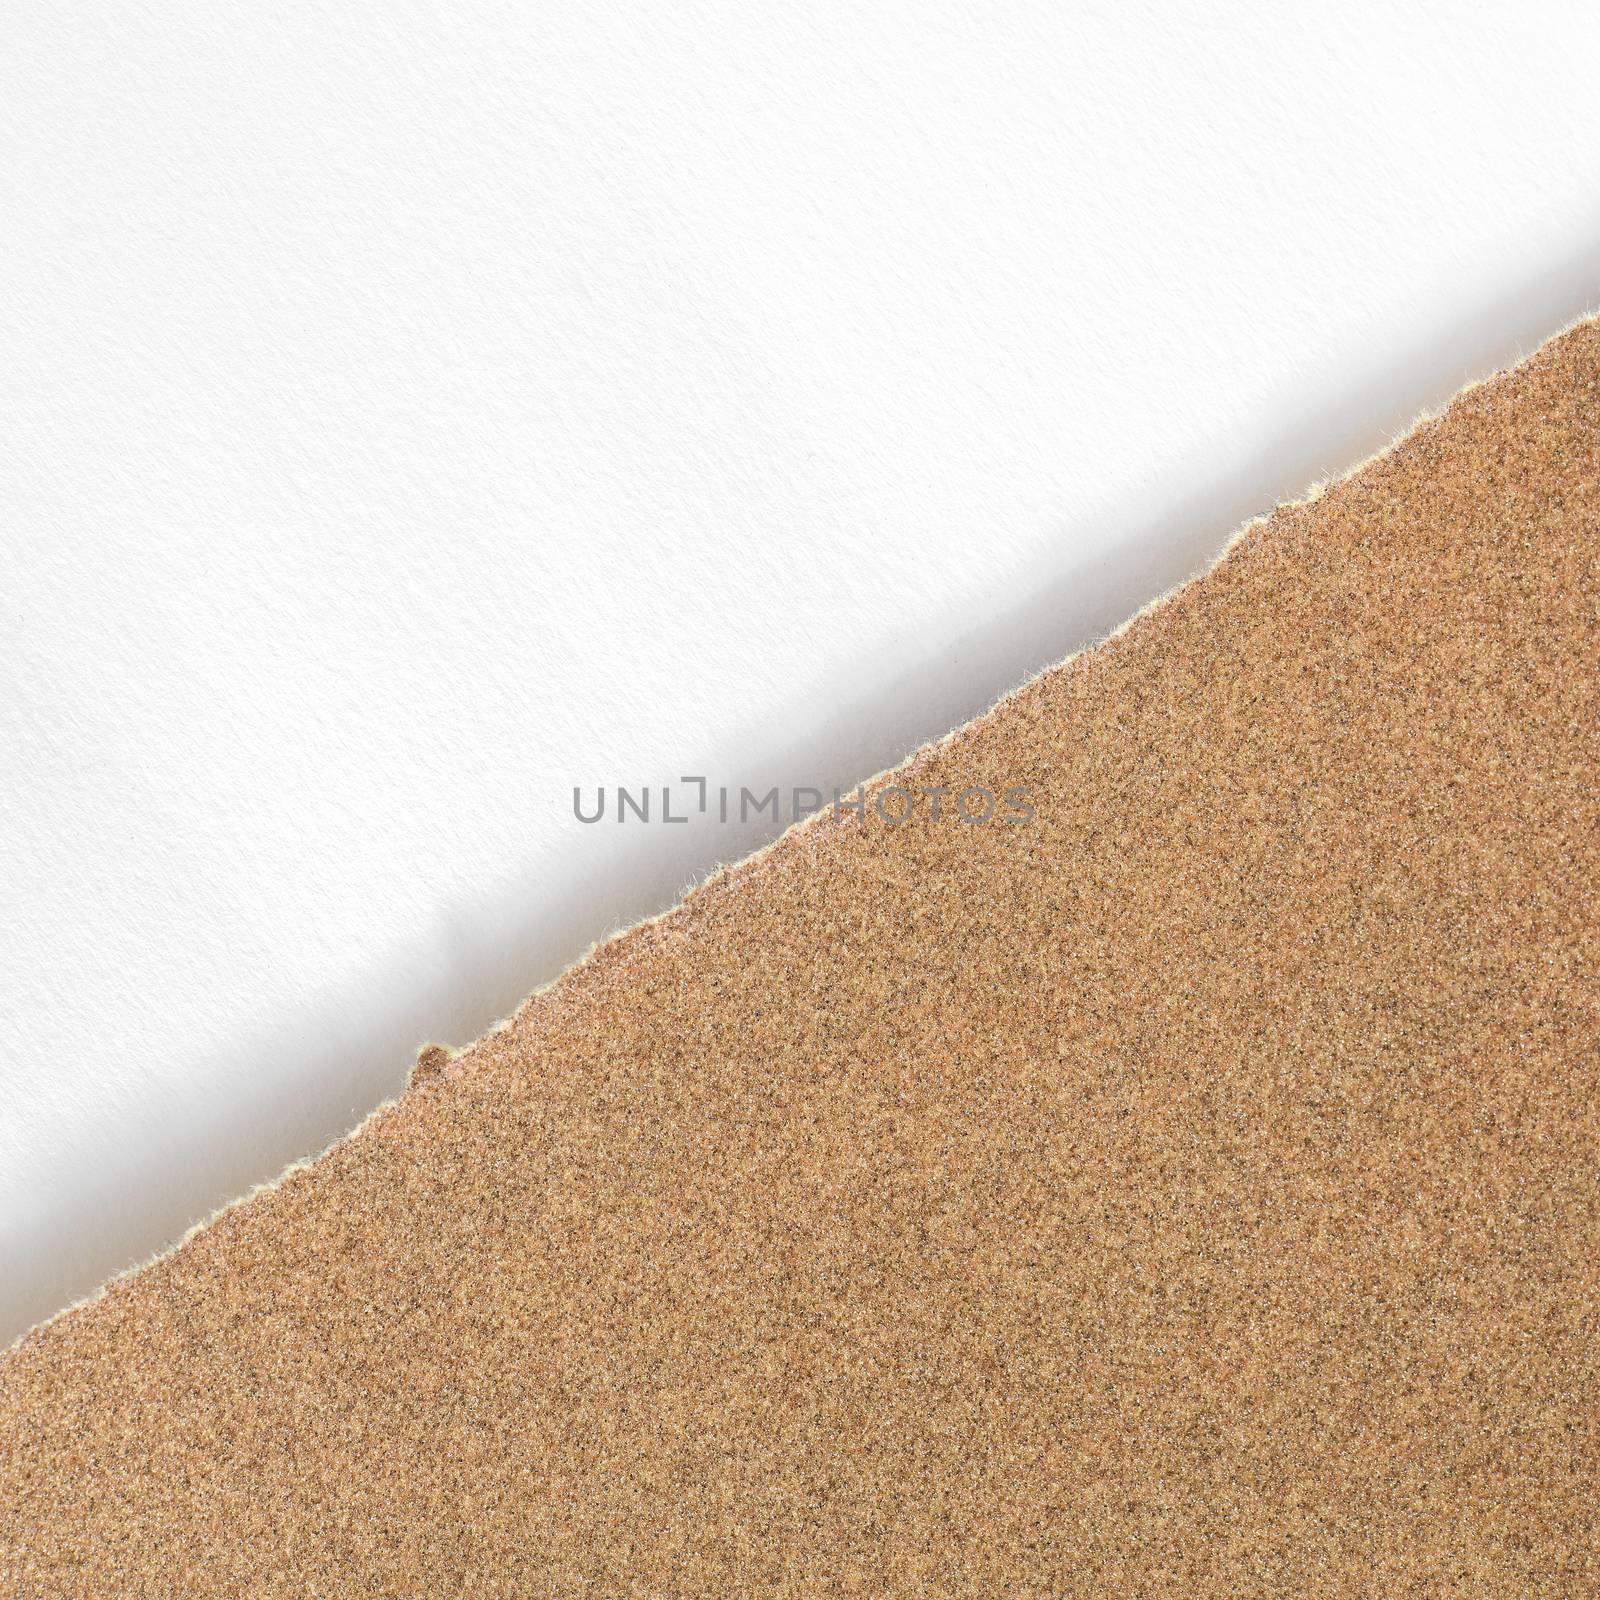 sandpaper texture by antpkr